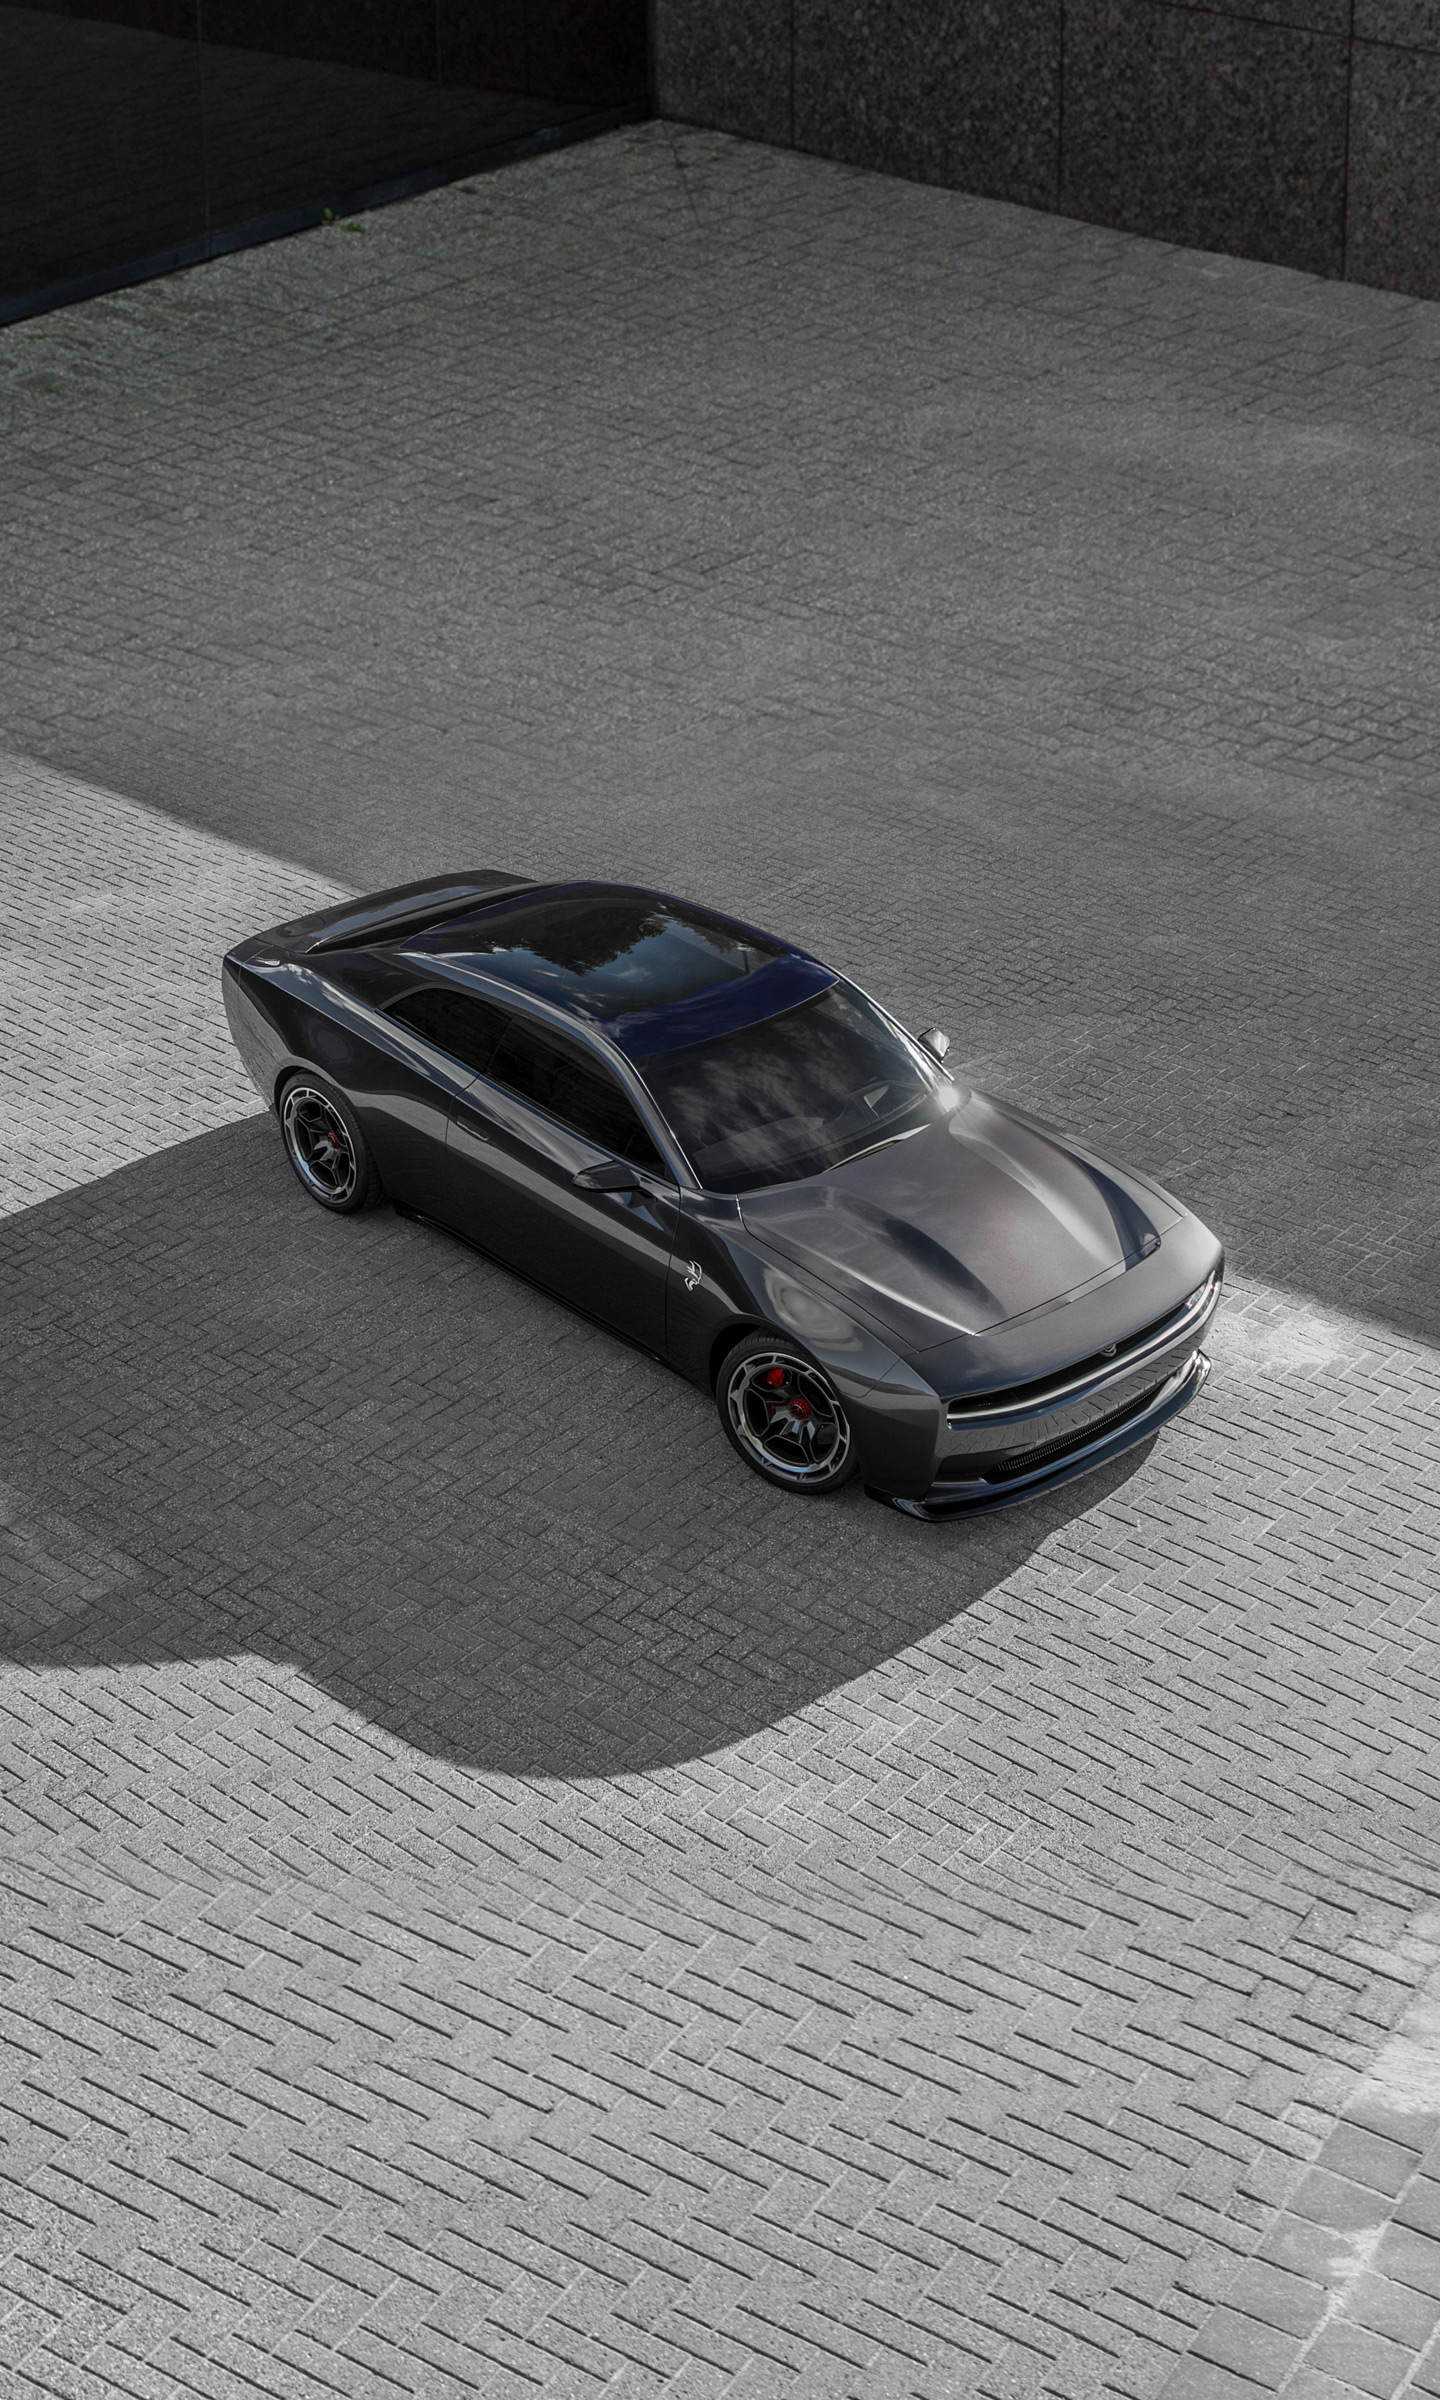  2022 Dodge Charger Daytona SRT Concept Wallpaper.